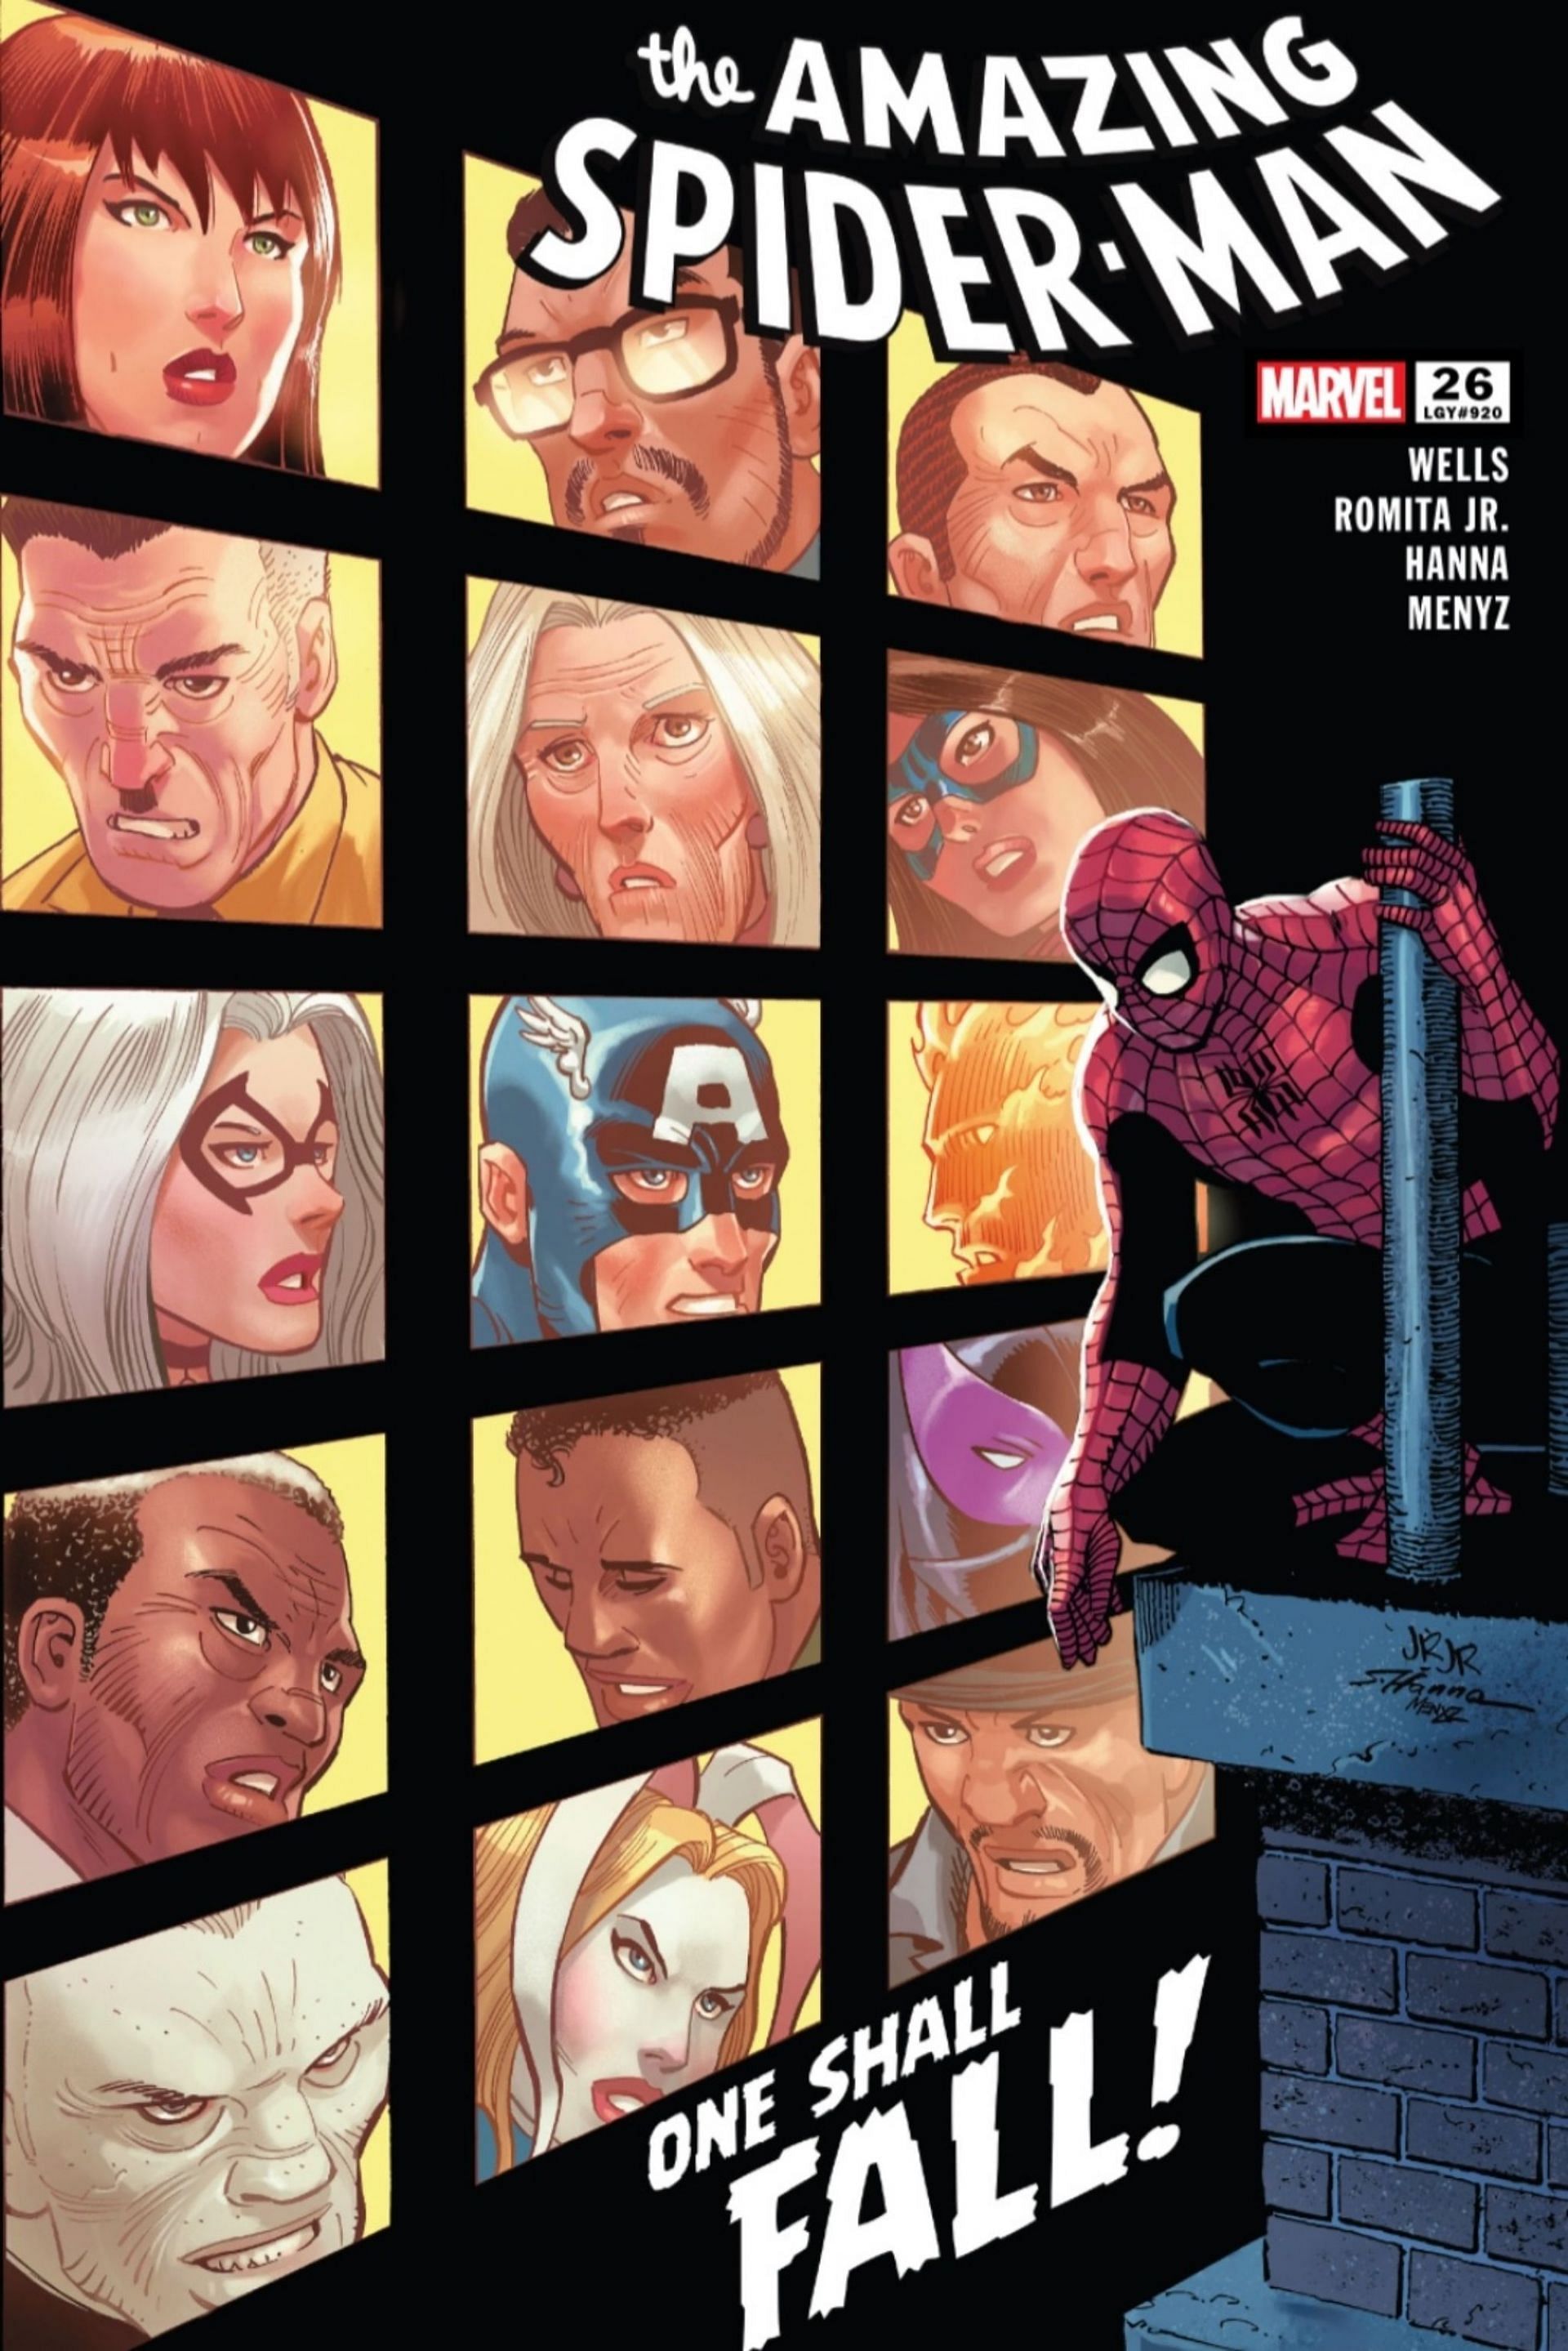 Cover for Amazing Spider-Man #26 (Image via Marvel Comics)